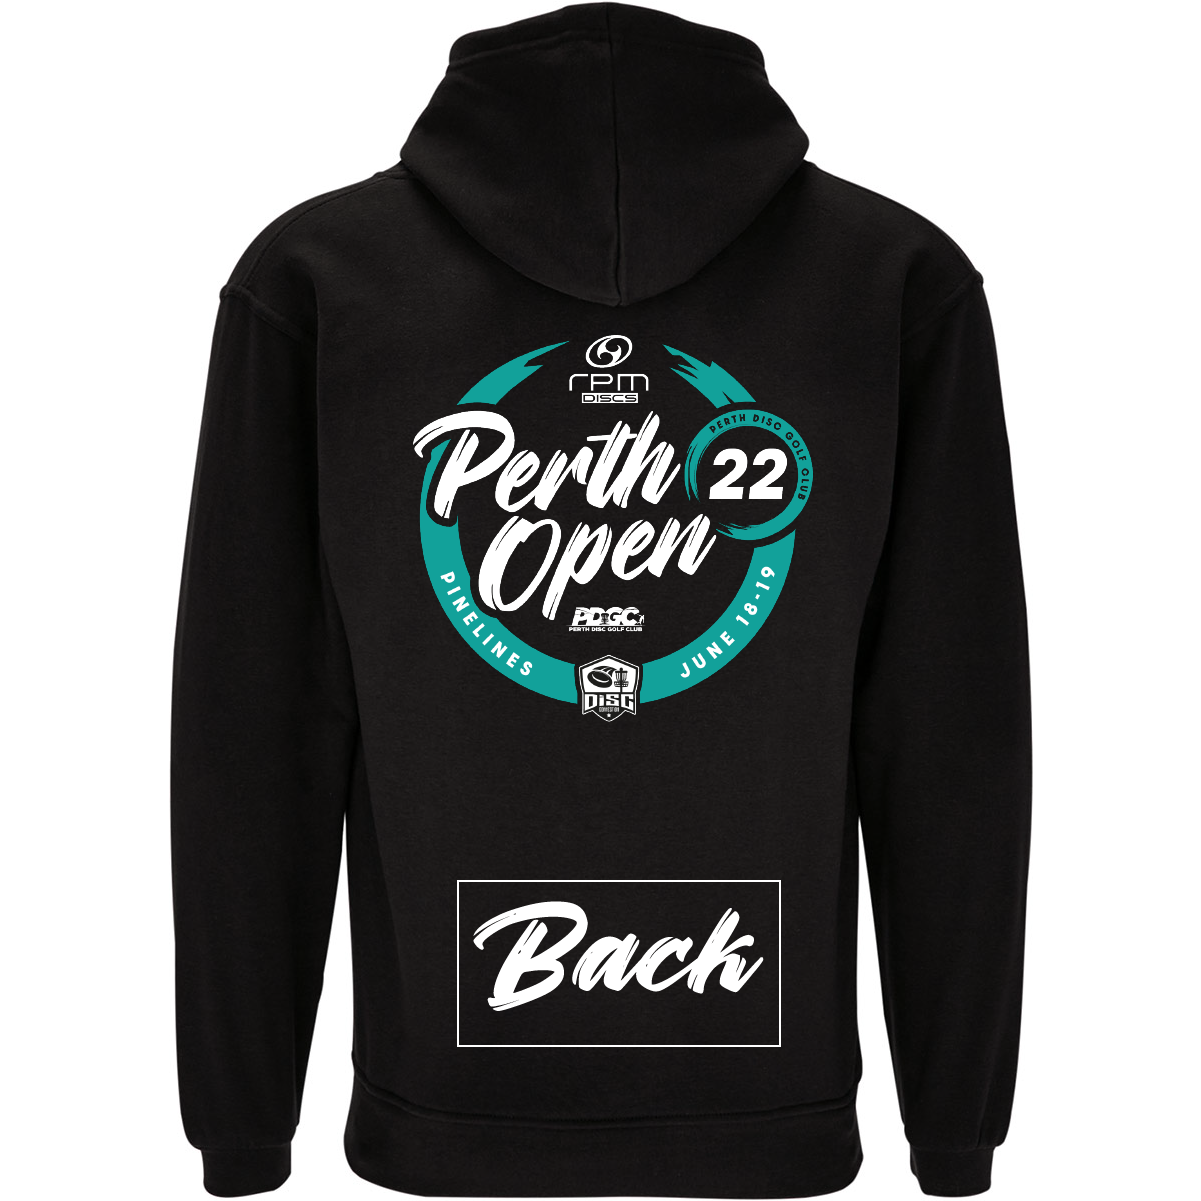 Perth Open 2022 Hoody - PREORDER!